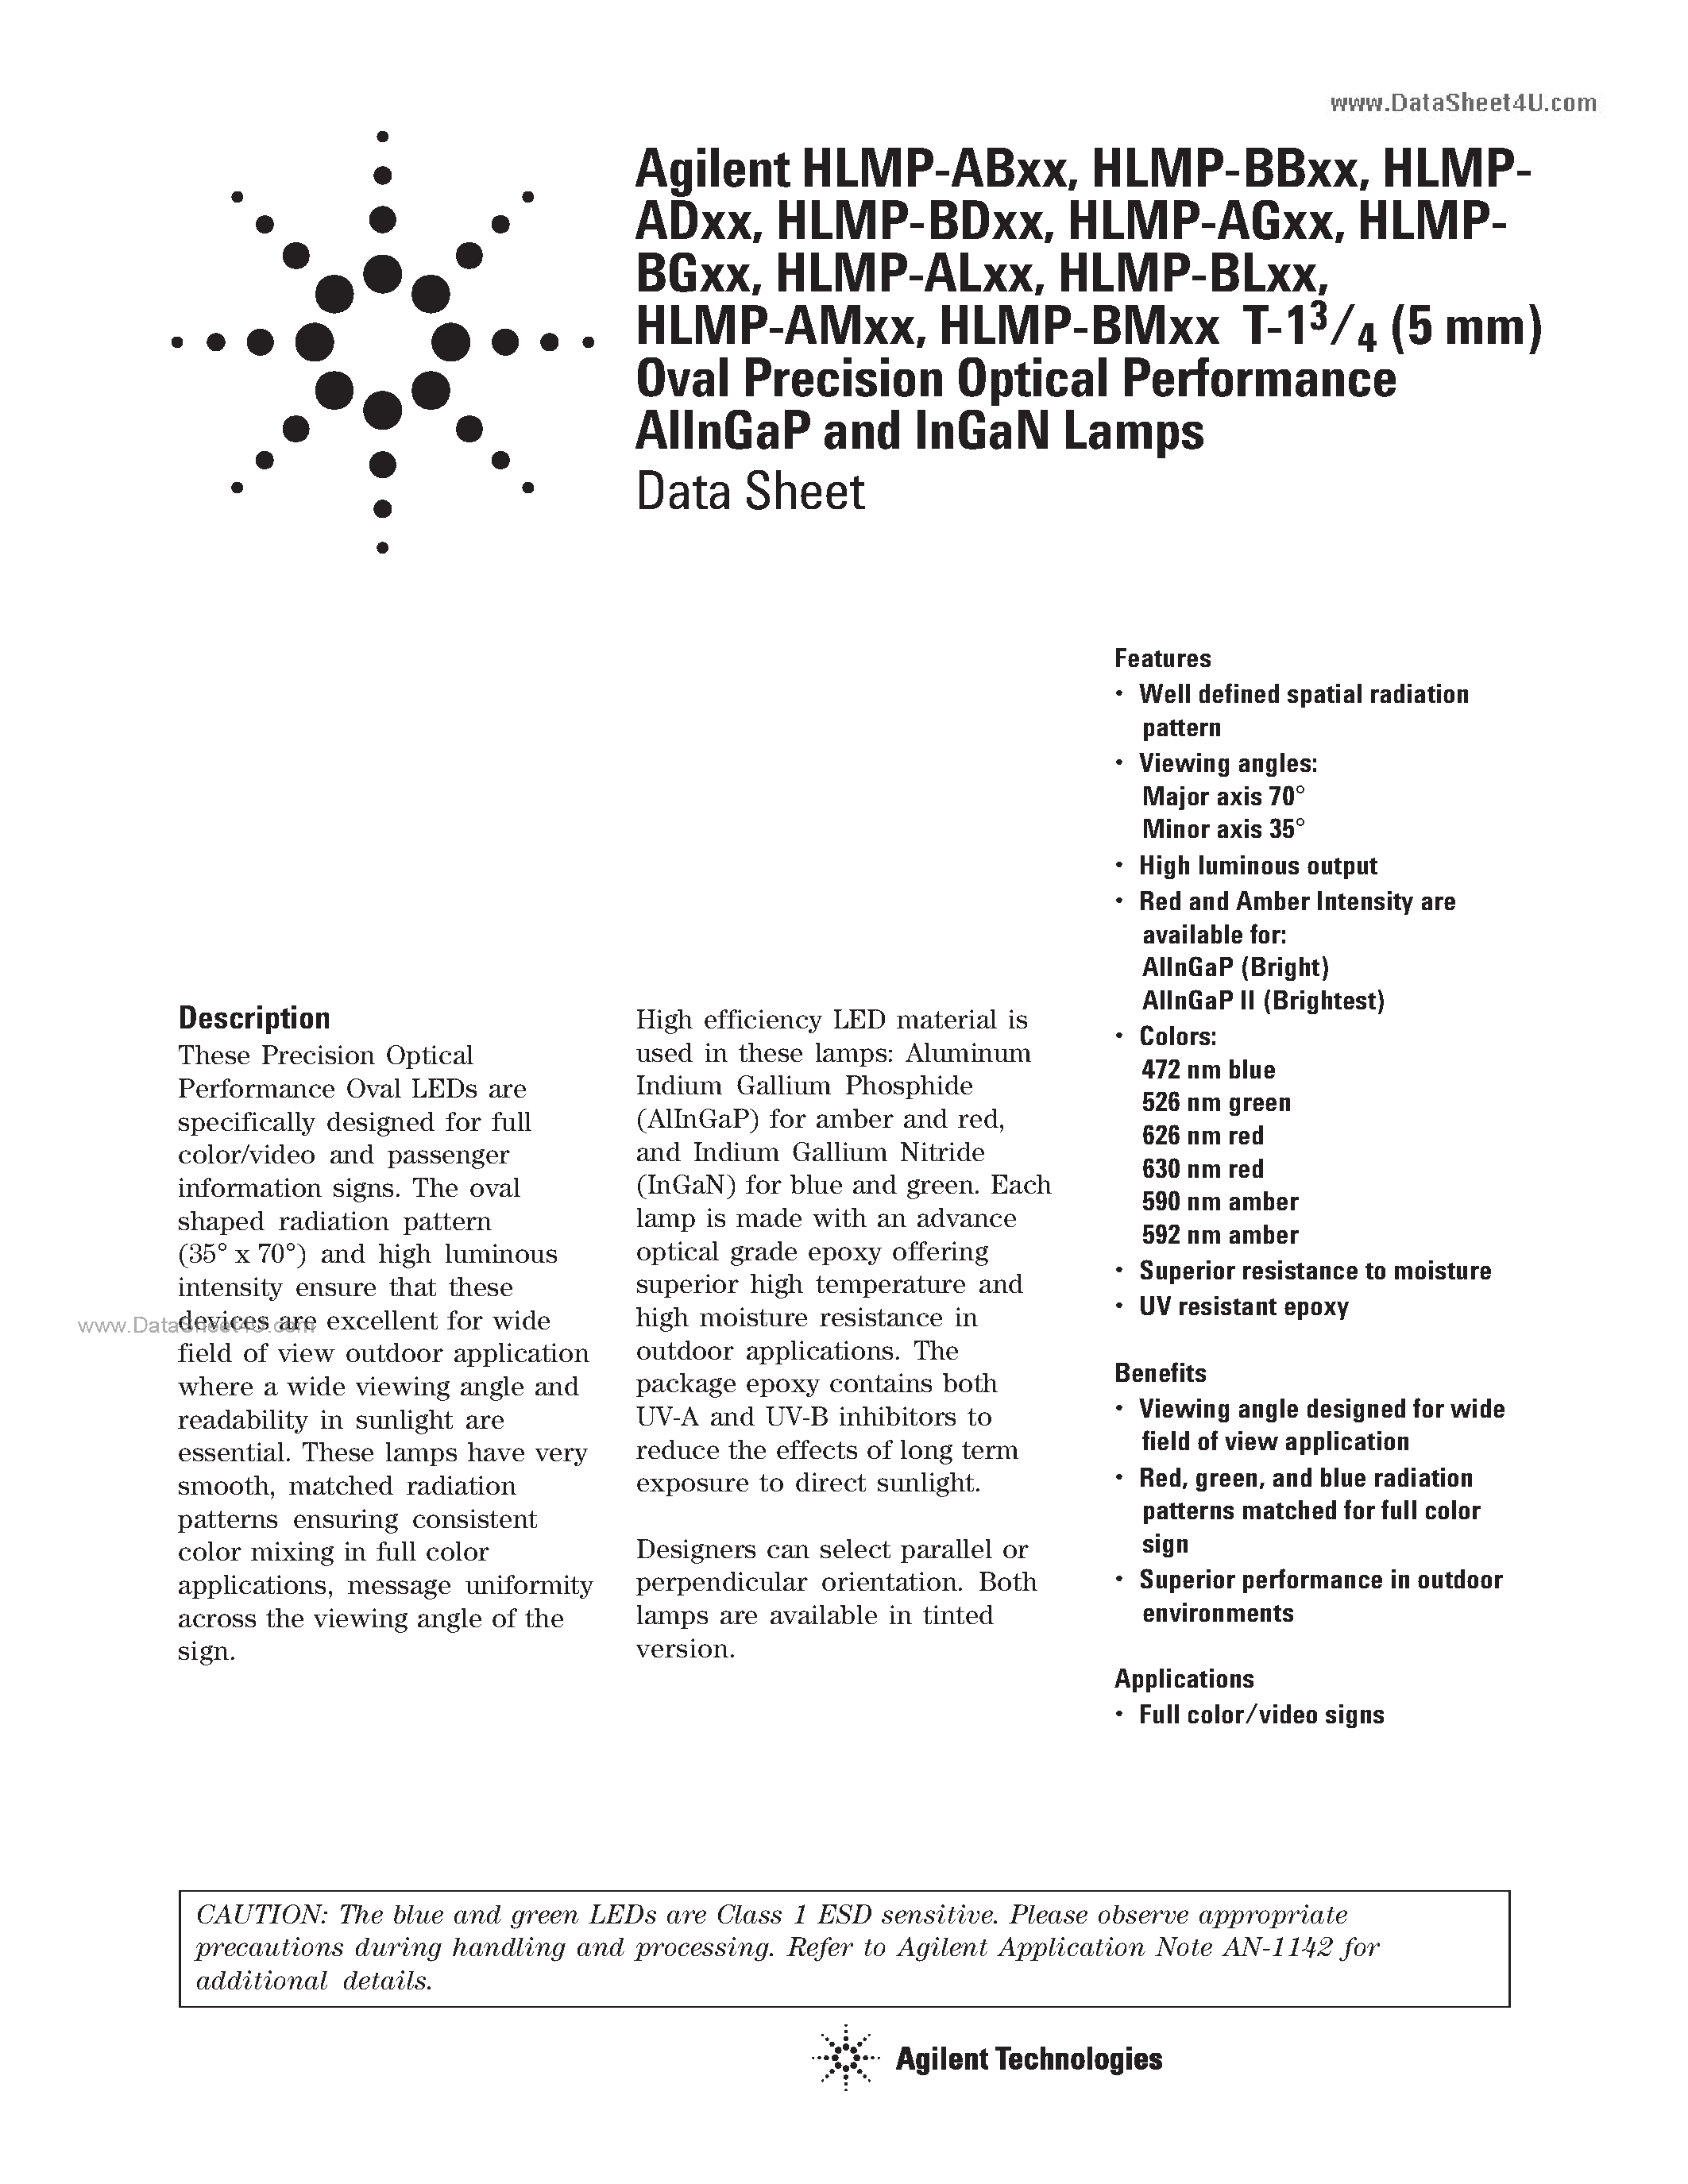 Даташит HLMP-ABxx - Oval Precision Optical Performance AlInGaP and InGaN Lamps страница 1